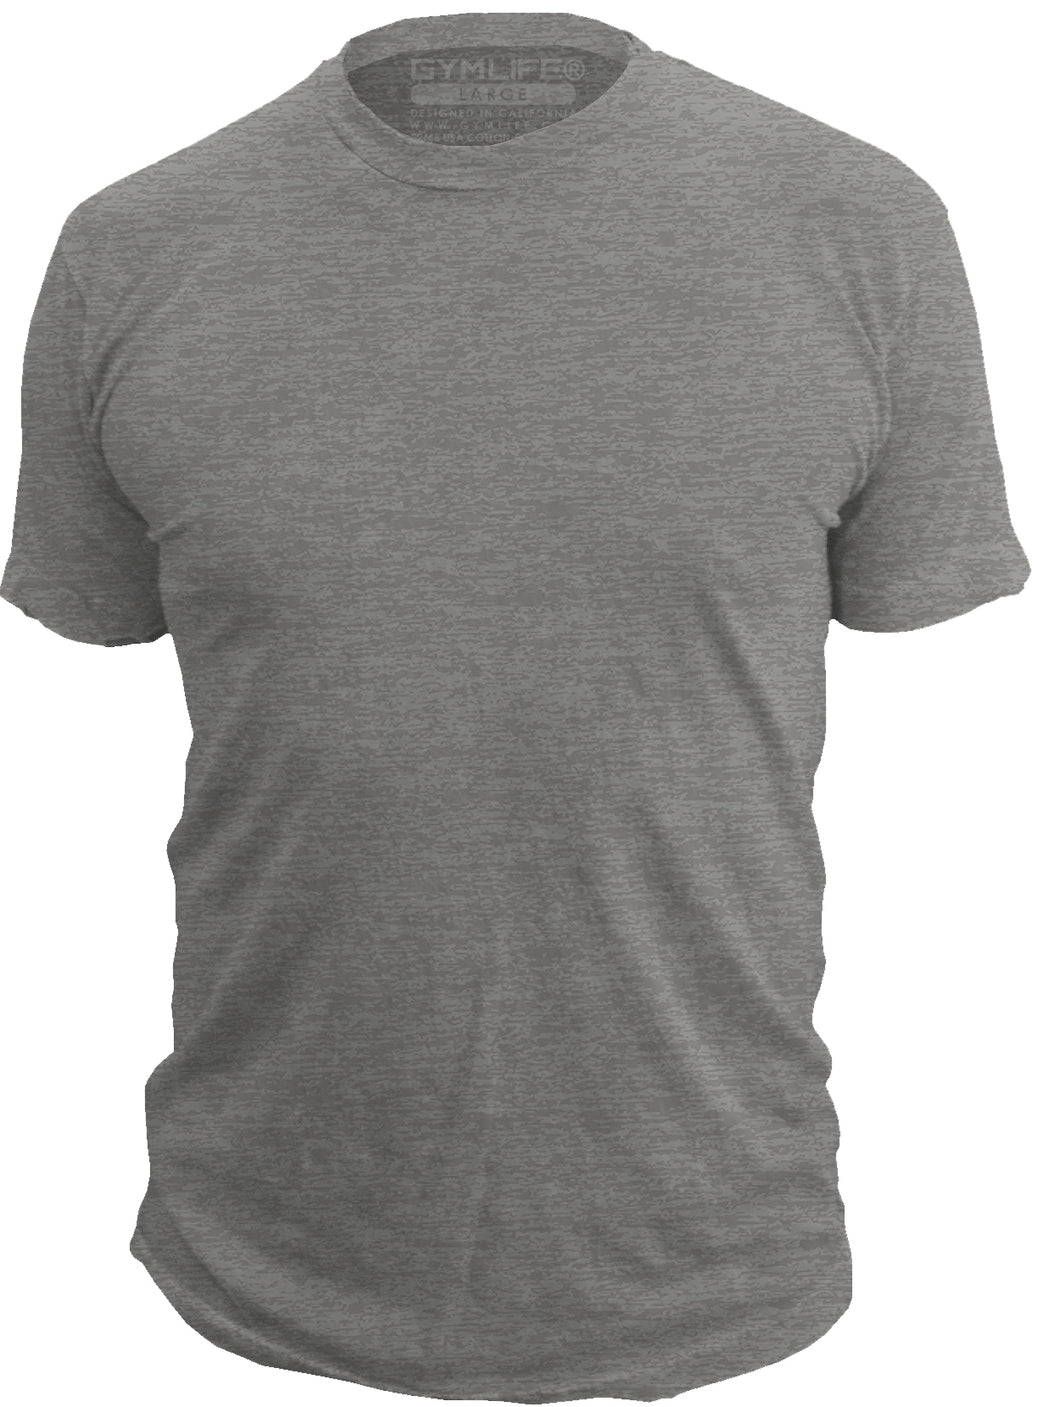 GYM LIFE - BLANK - Mens Athletic 52/48 Premium T-Shirt, Made of USA, Slate Heather